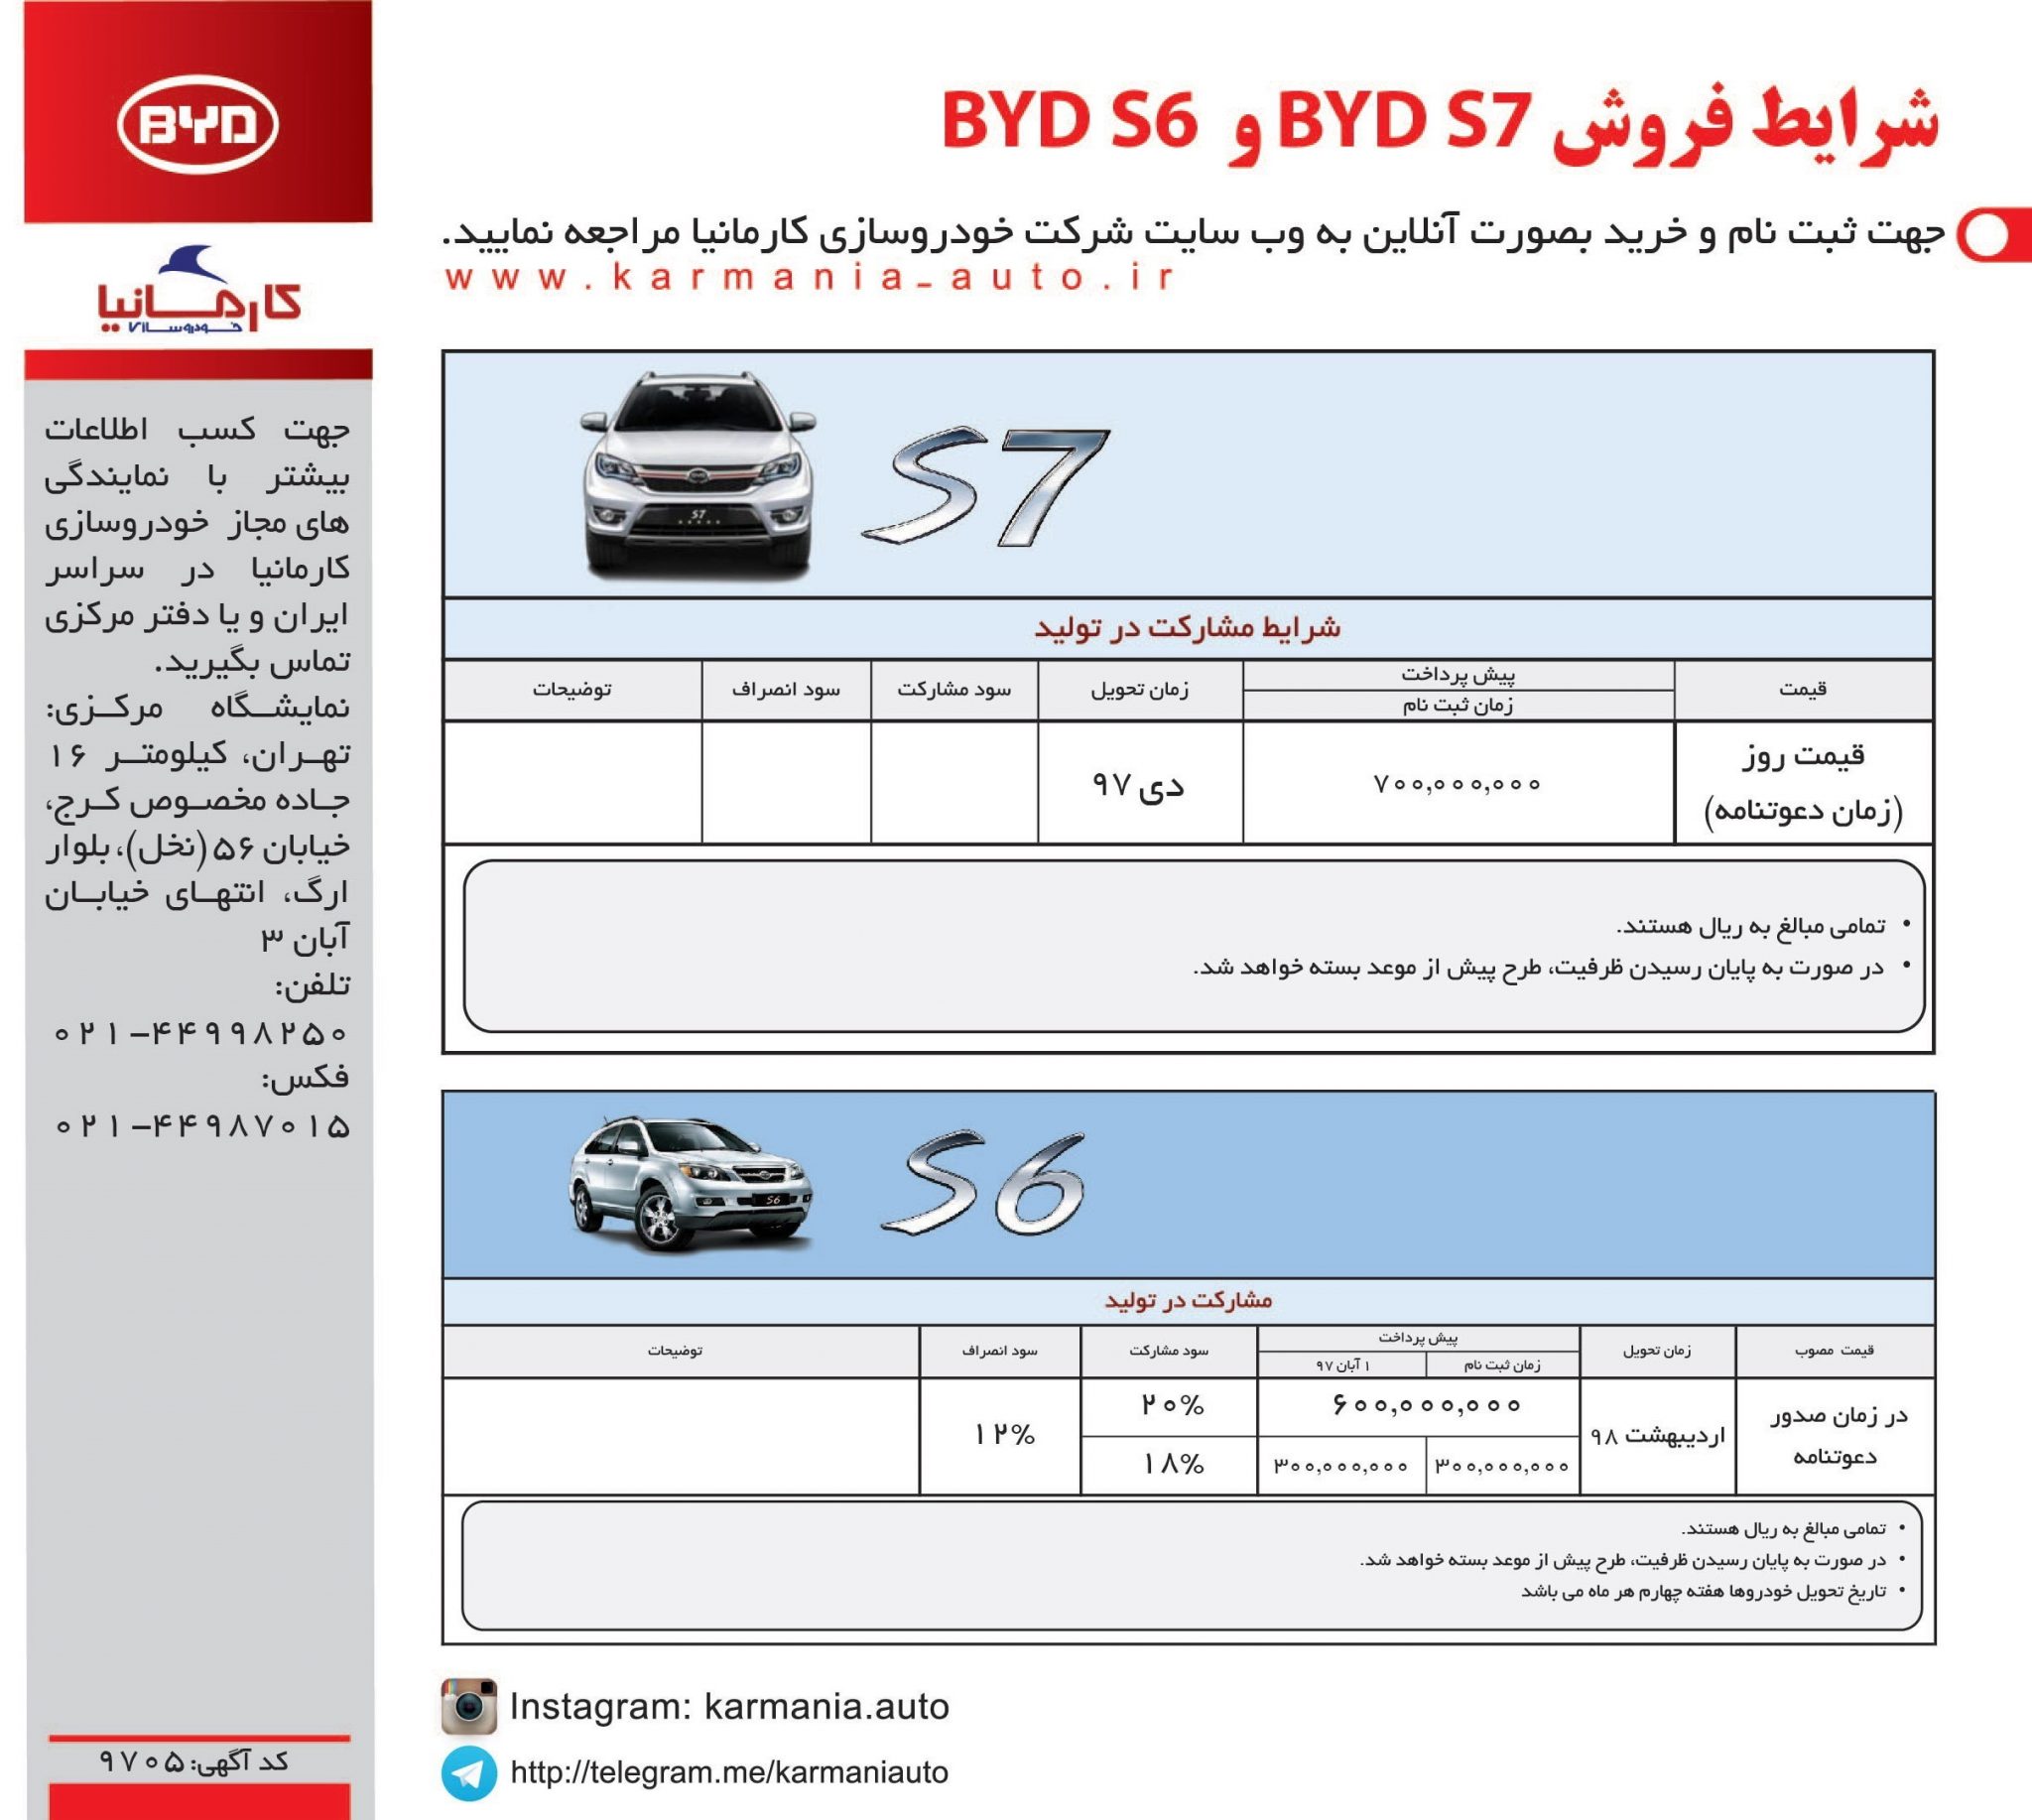 139704181413305420595310 - شرایط جدید فروش BYD S۶ و BYD S۷ اعلام شد